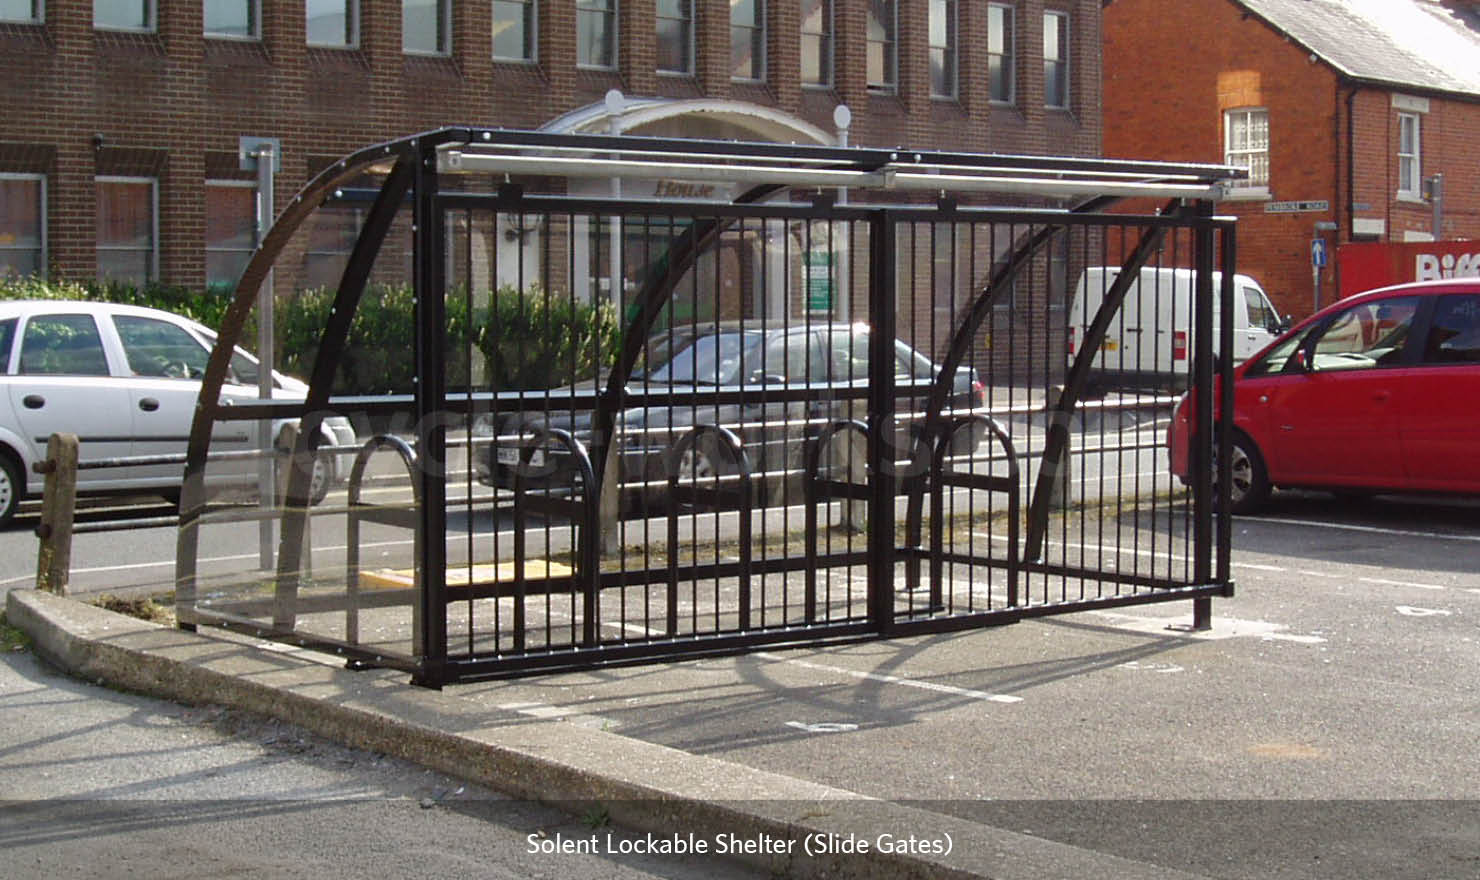 Bike Shelter with Lockable swing gates